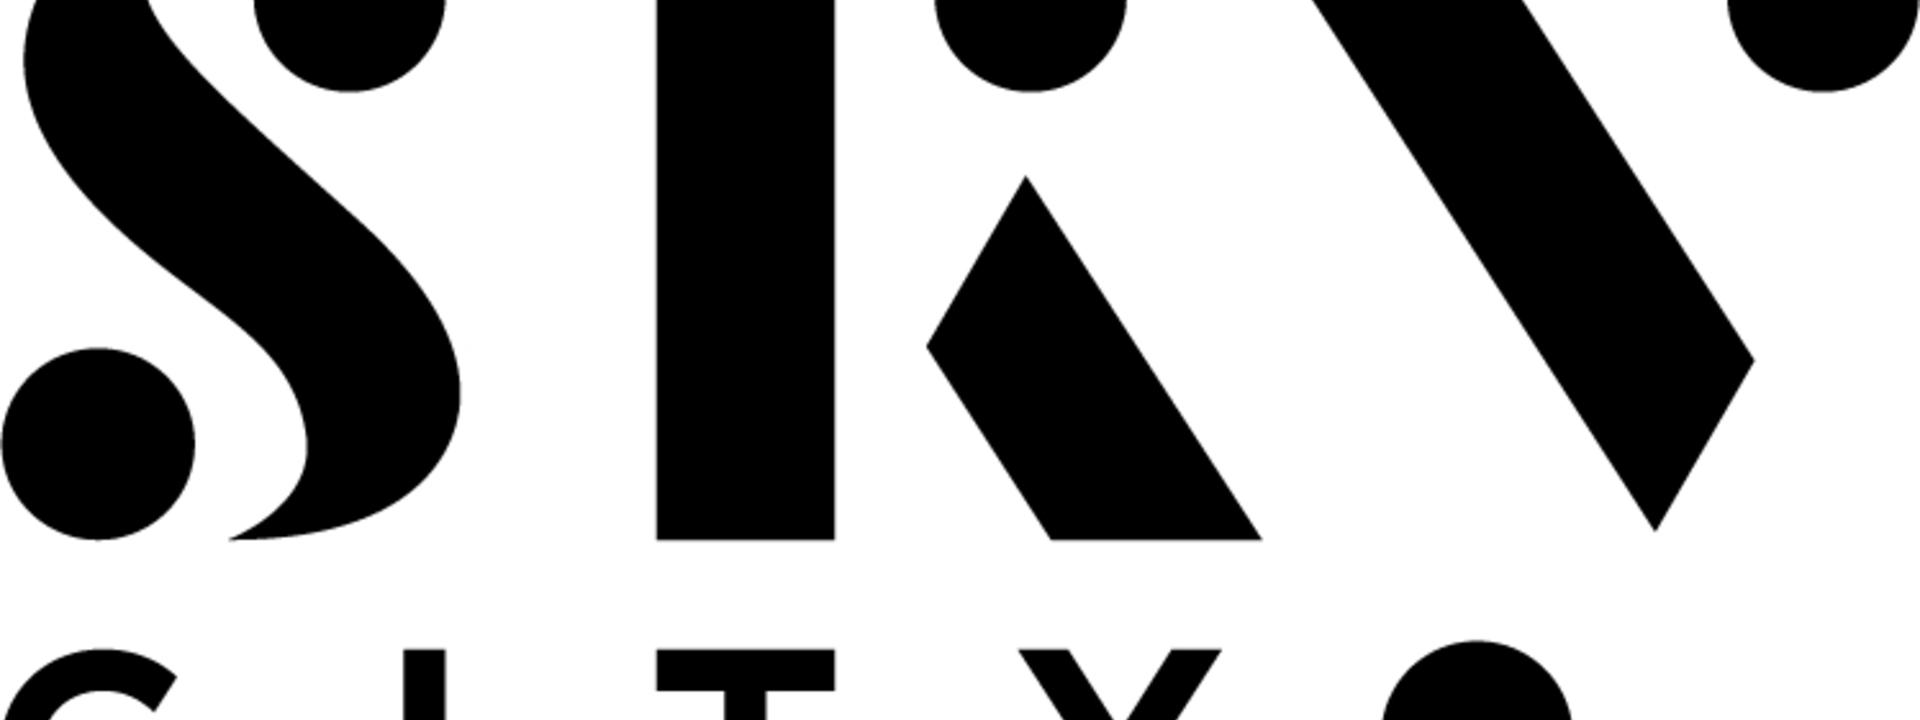 skycity-stacked-logo-auckland-black-rgb.jpg